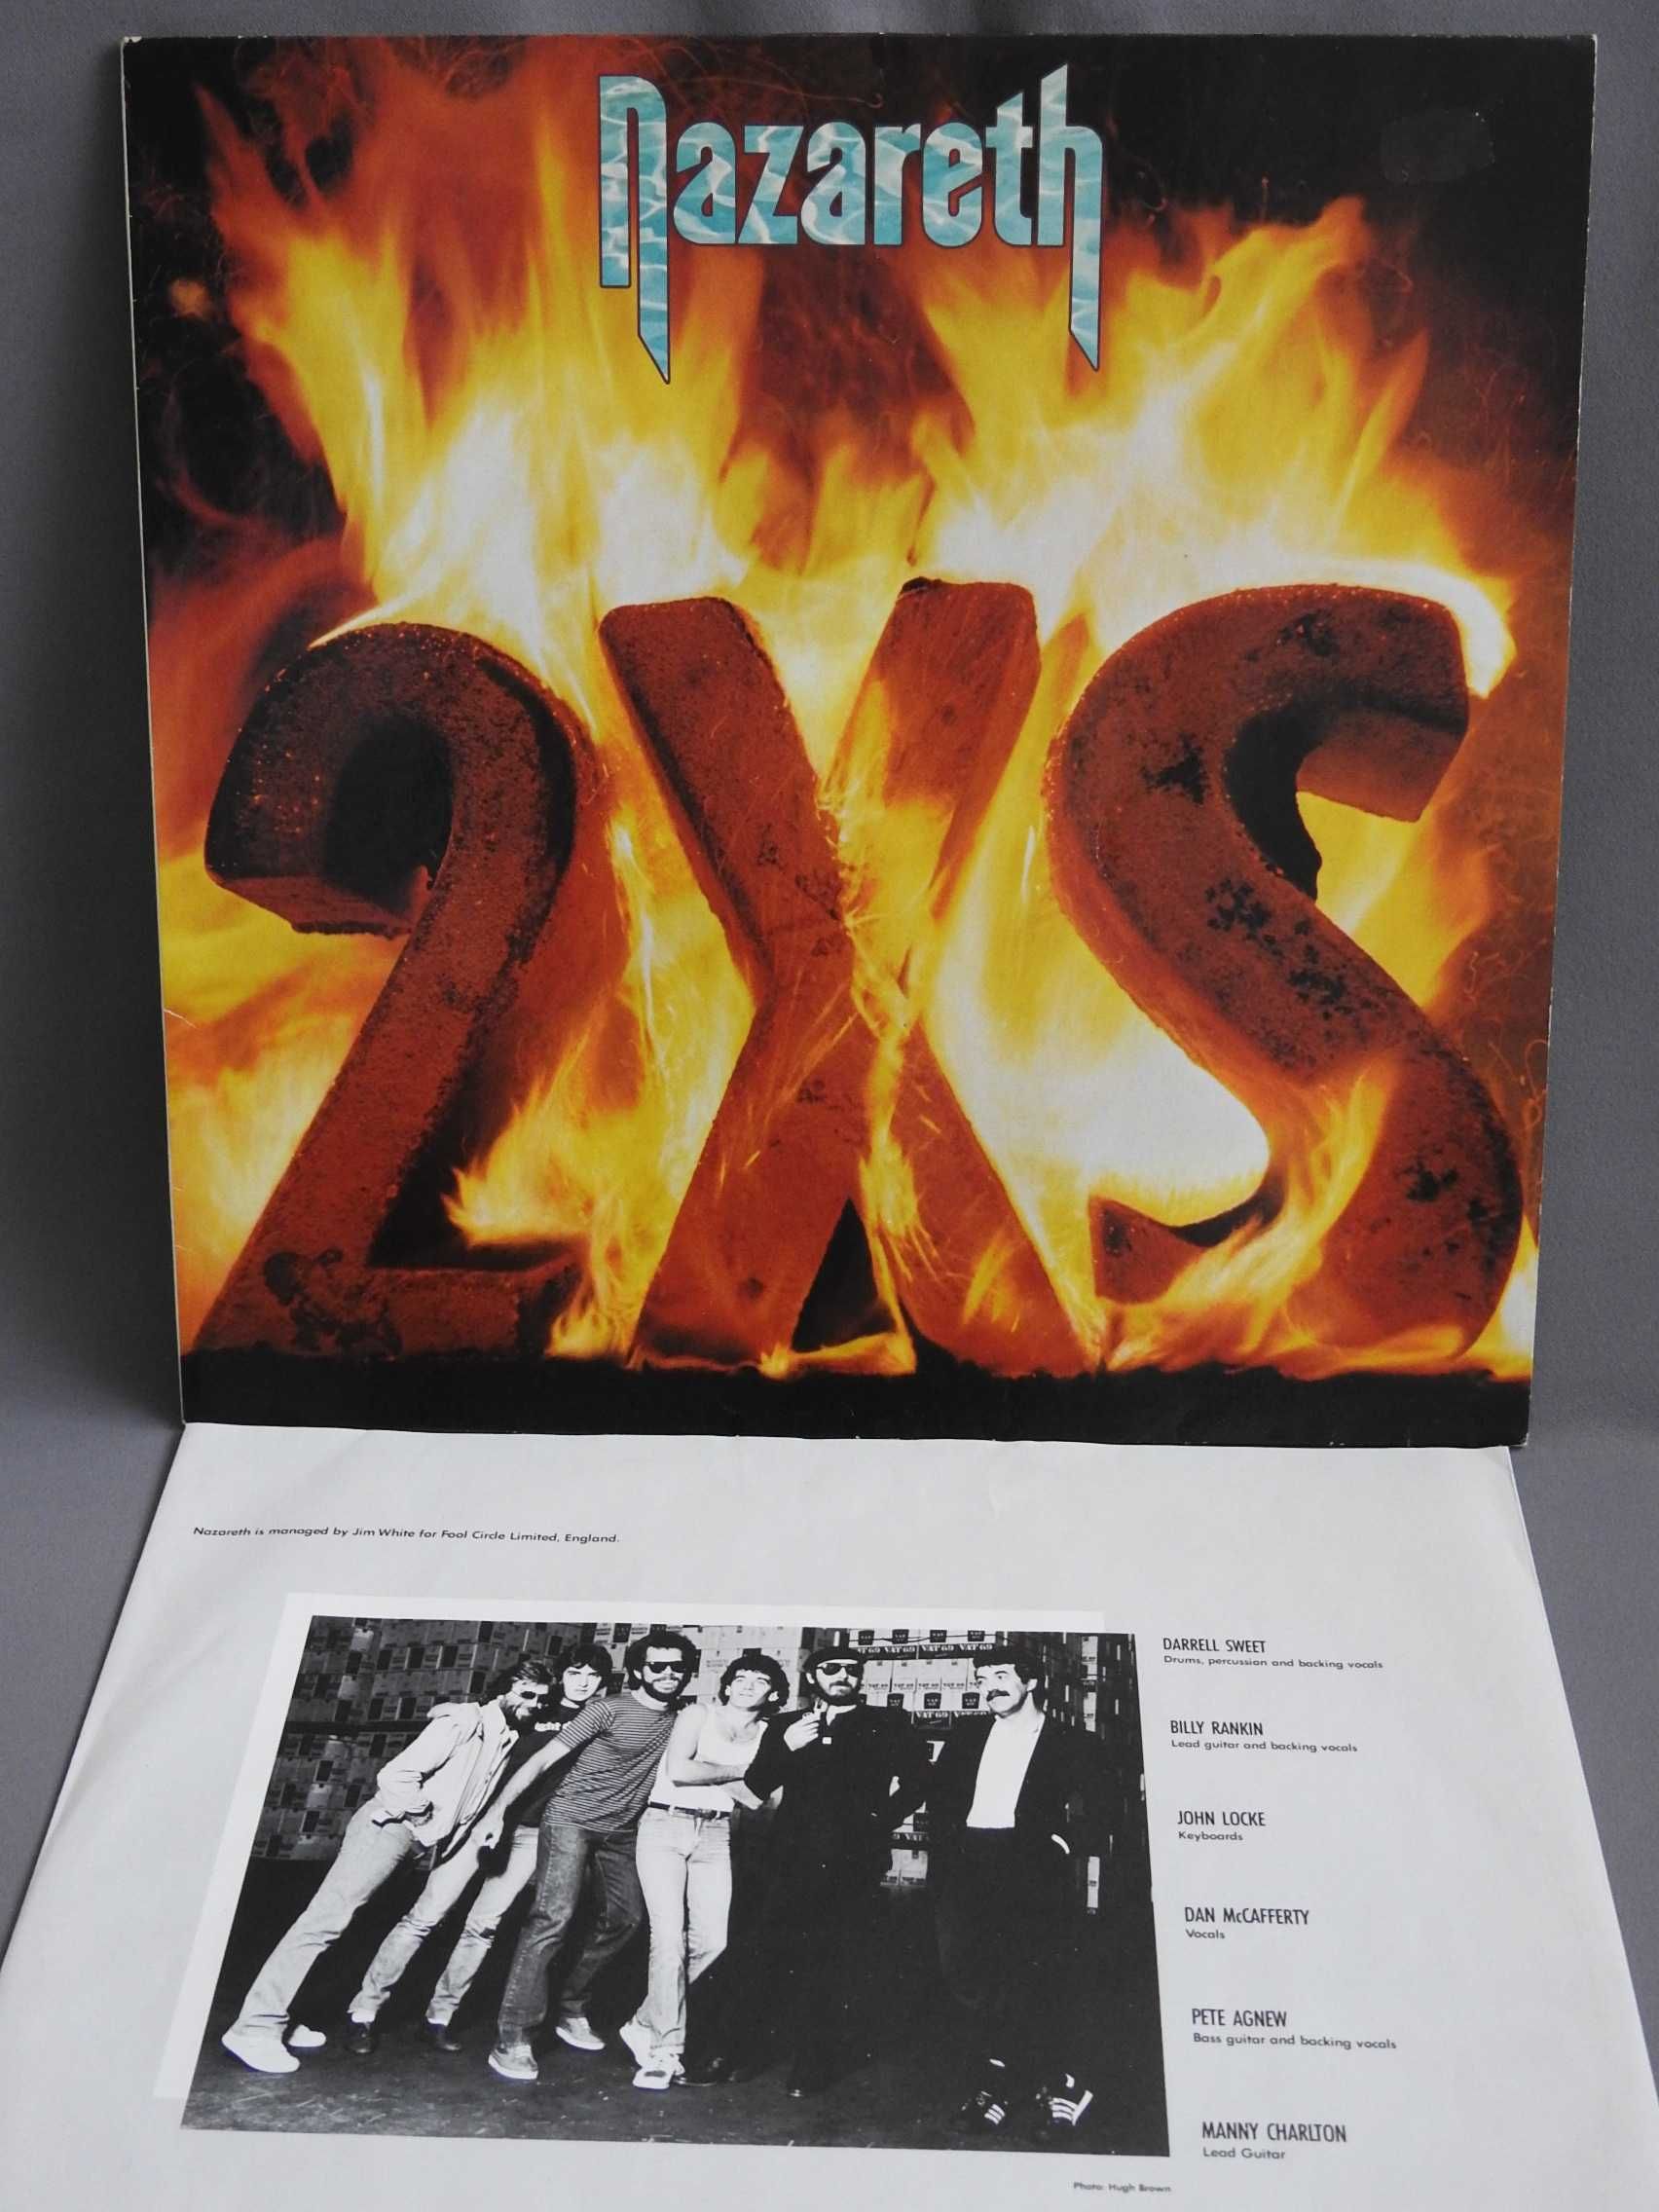 Nazareth 2XS LP пластинка 1982 Germany NM/EX 1 press оригинал